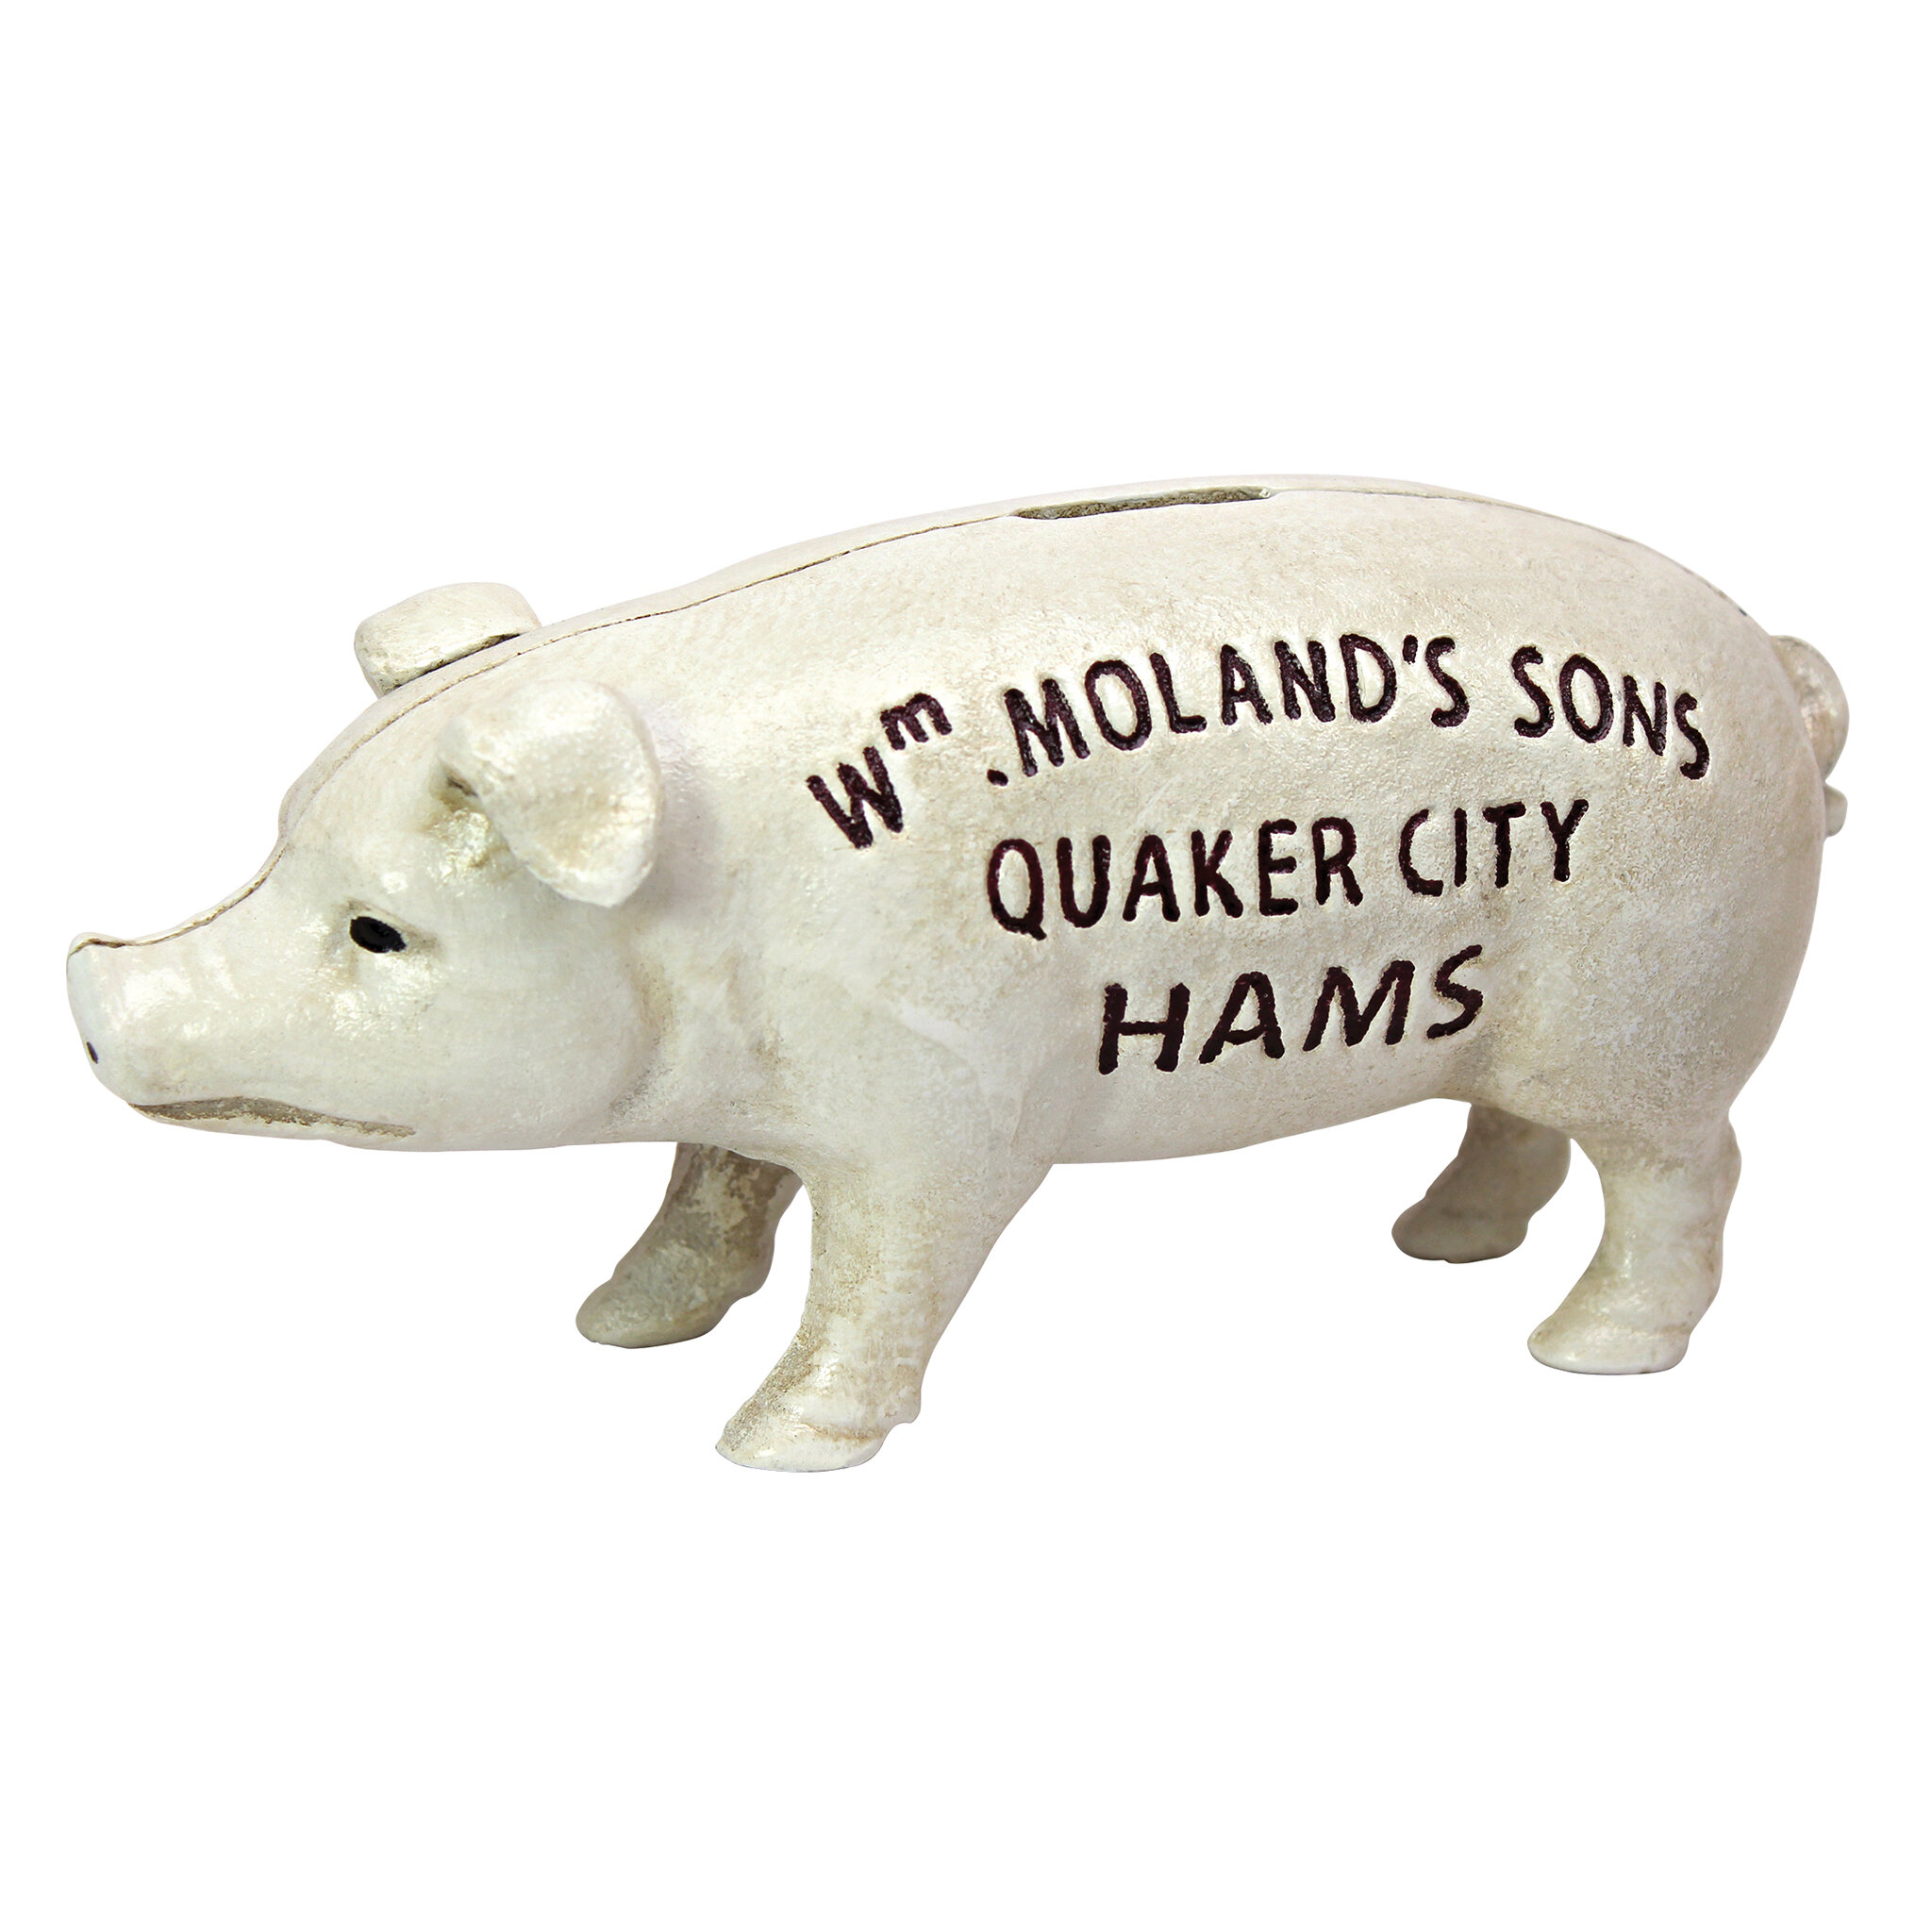 VINTAGE STYLE Wm MOLAND'S SONS QUAKER CITY HAMS CAST IRON PIG HOG PIGGY BANK 